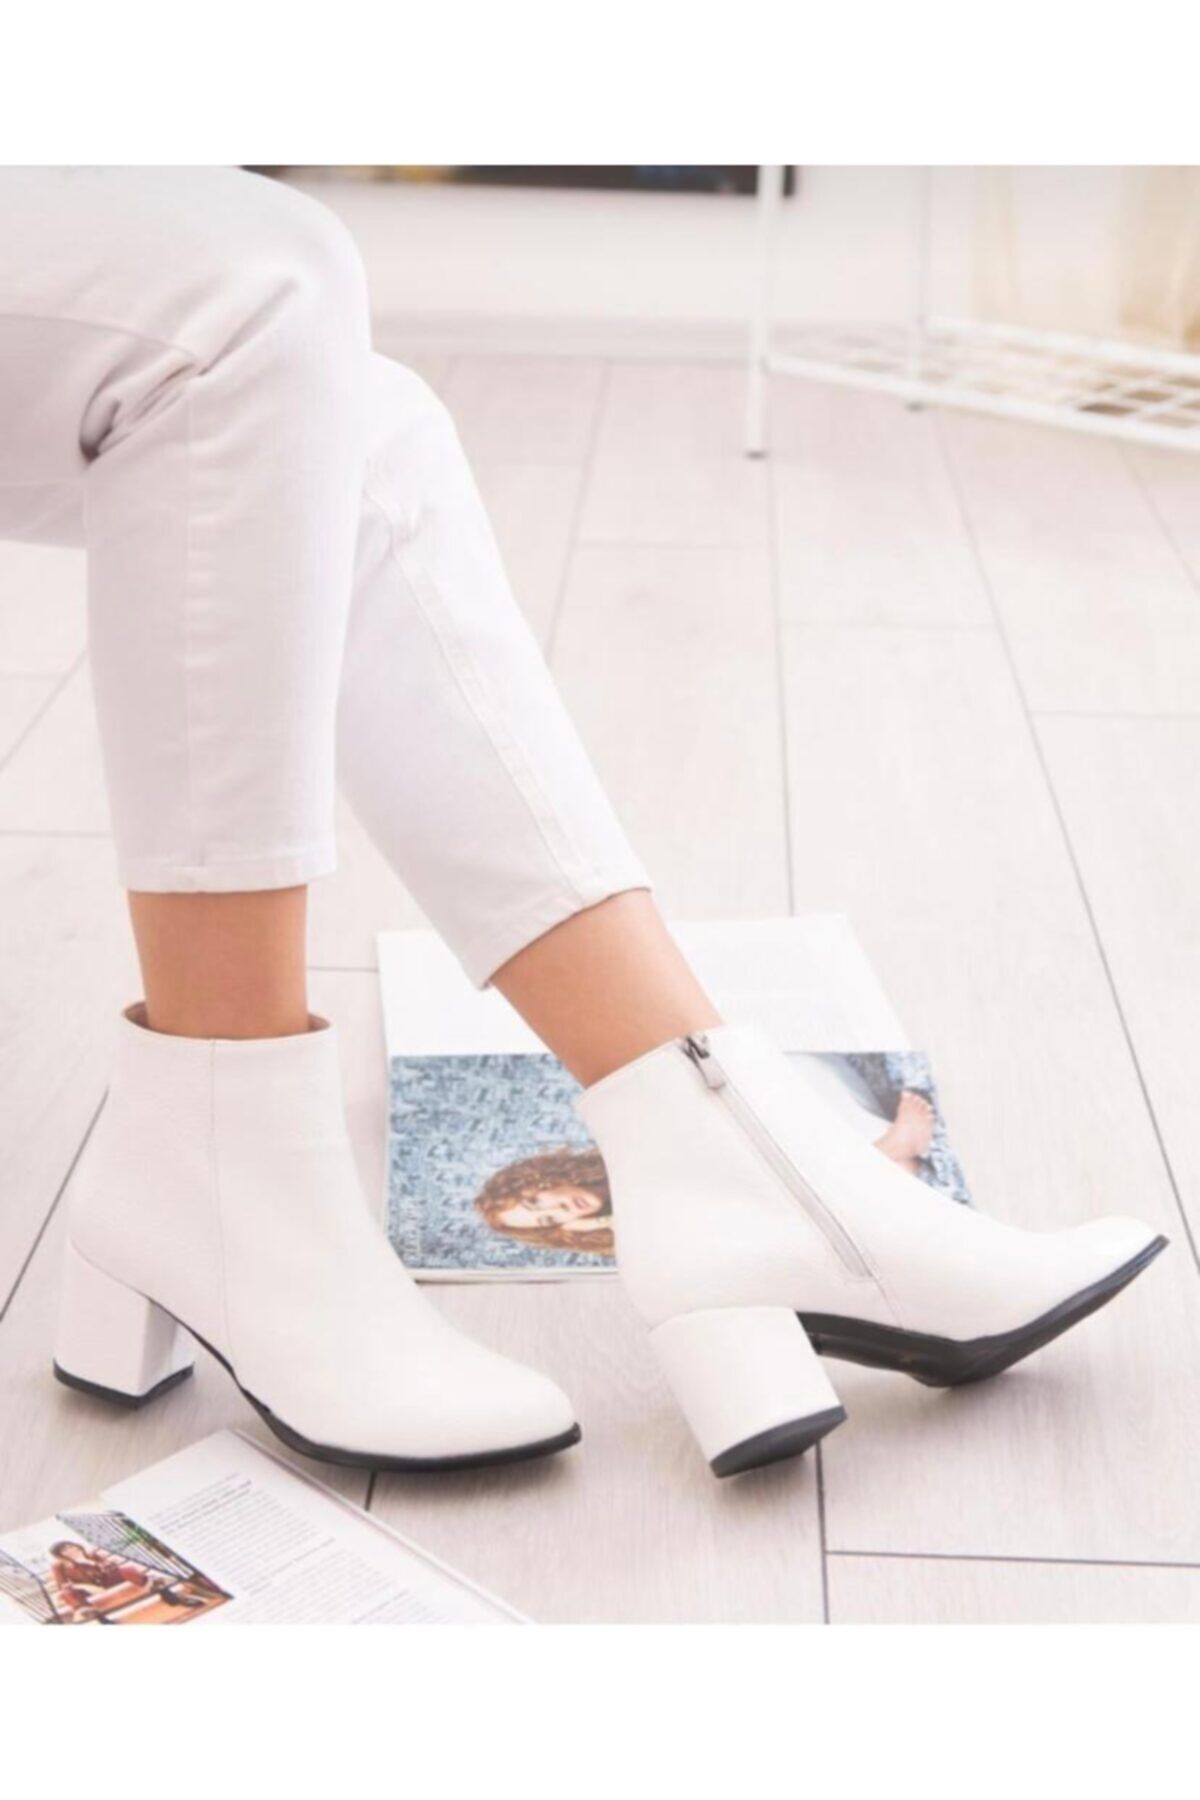 BY MAY SHOES Kadın Topuklu Düz Beyaz Bot Ayakkabı